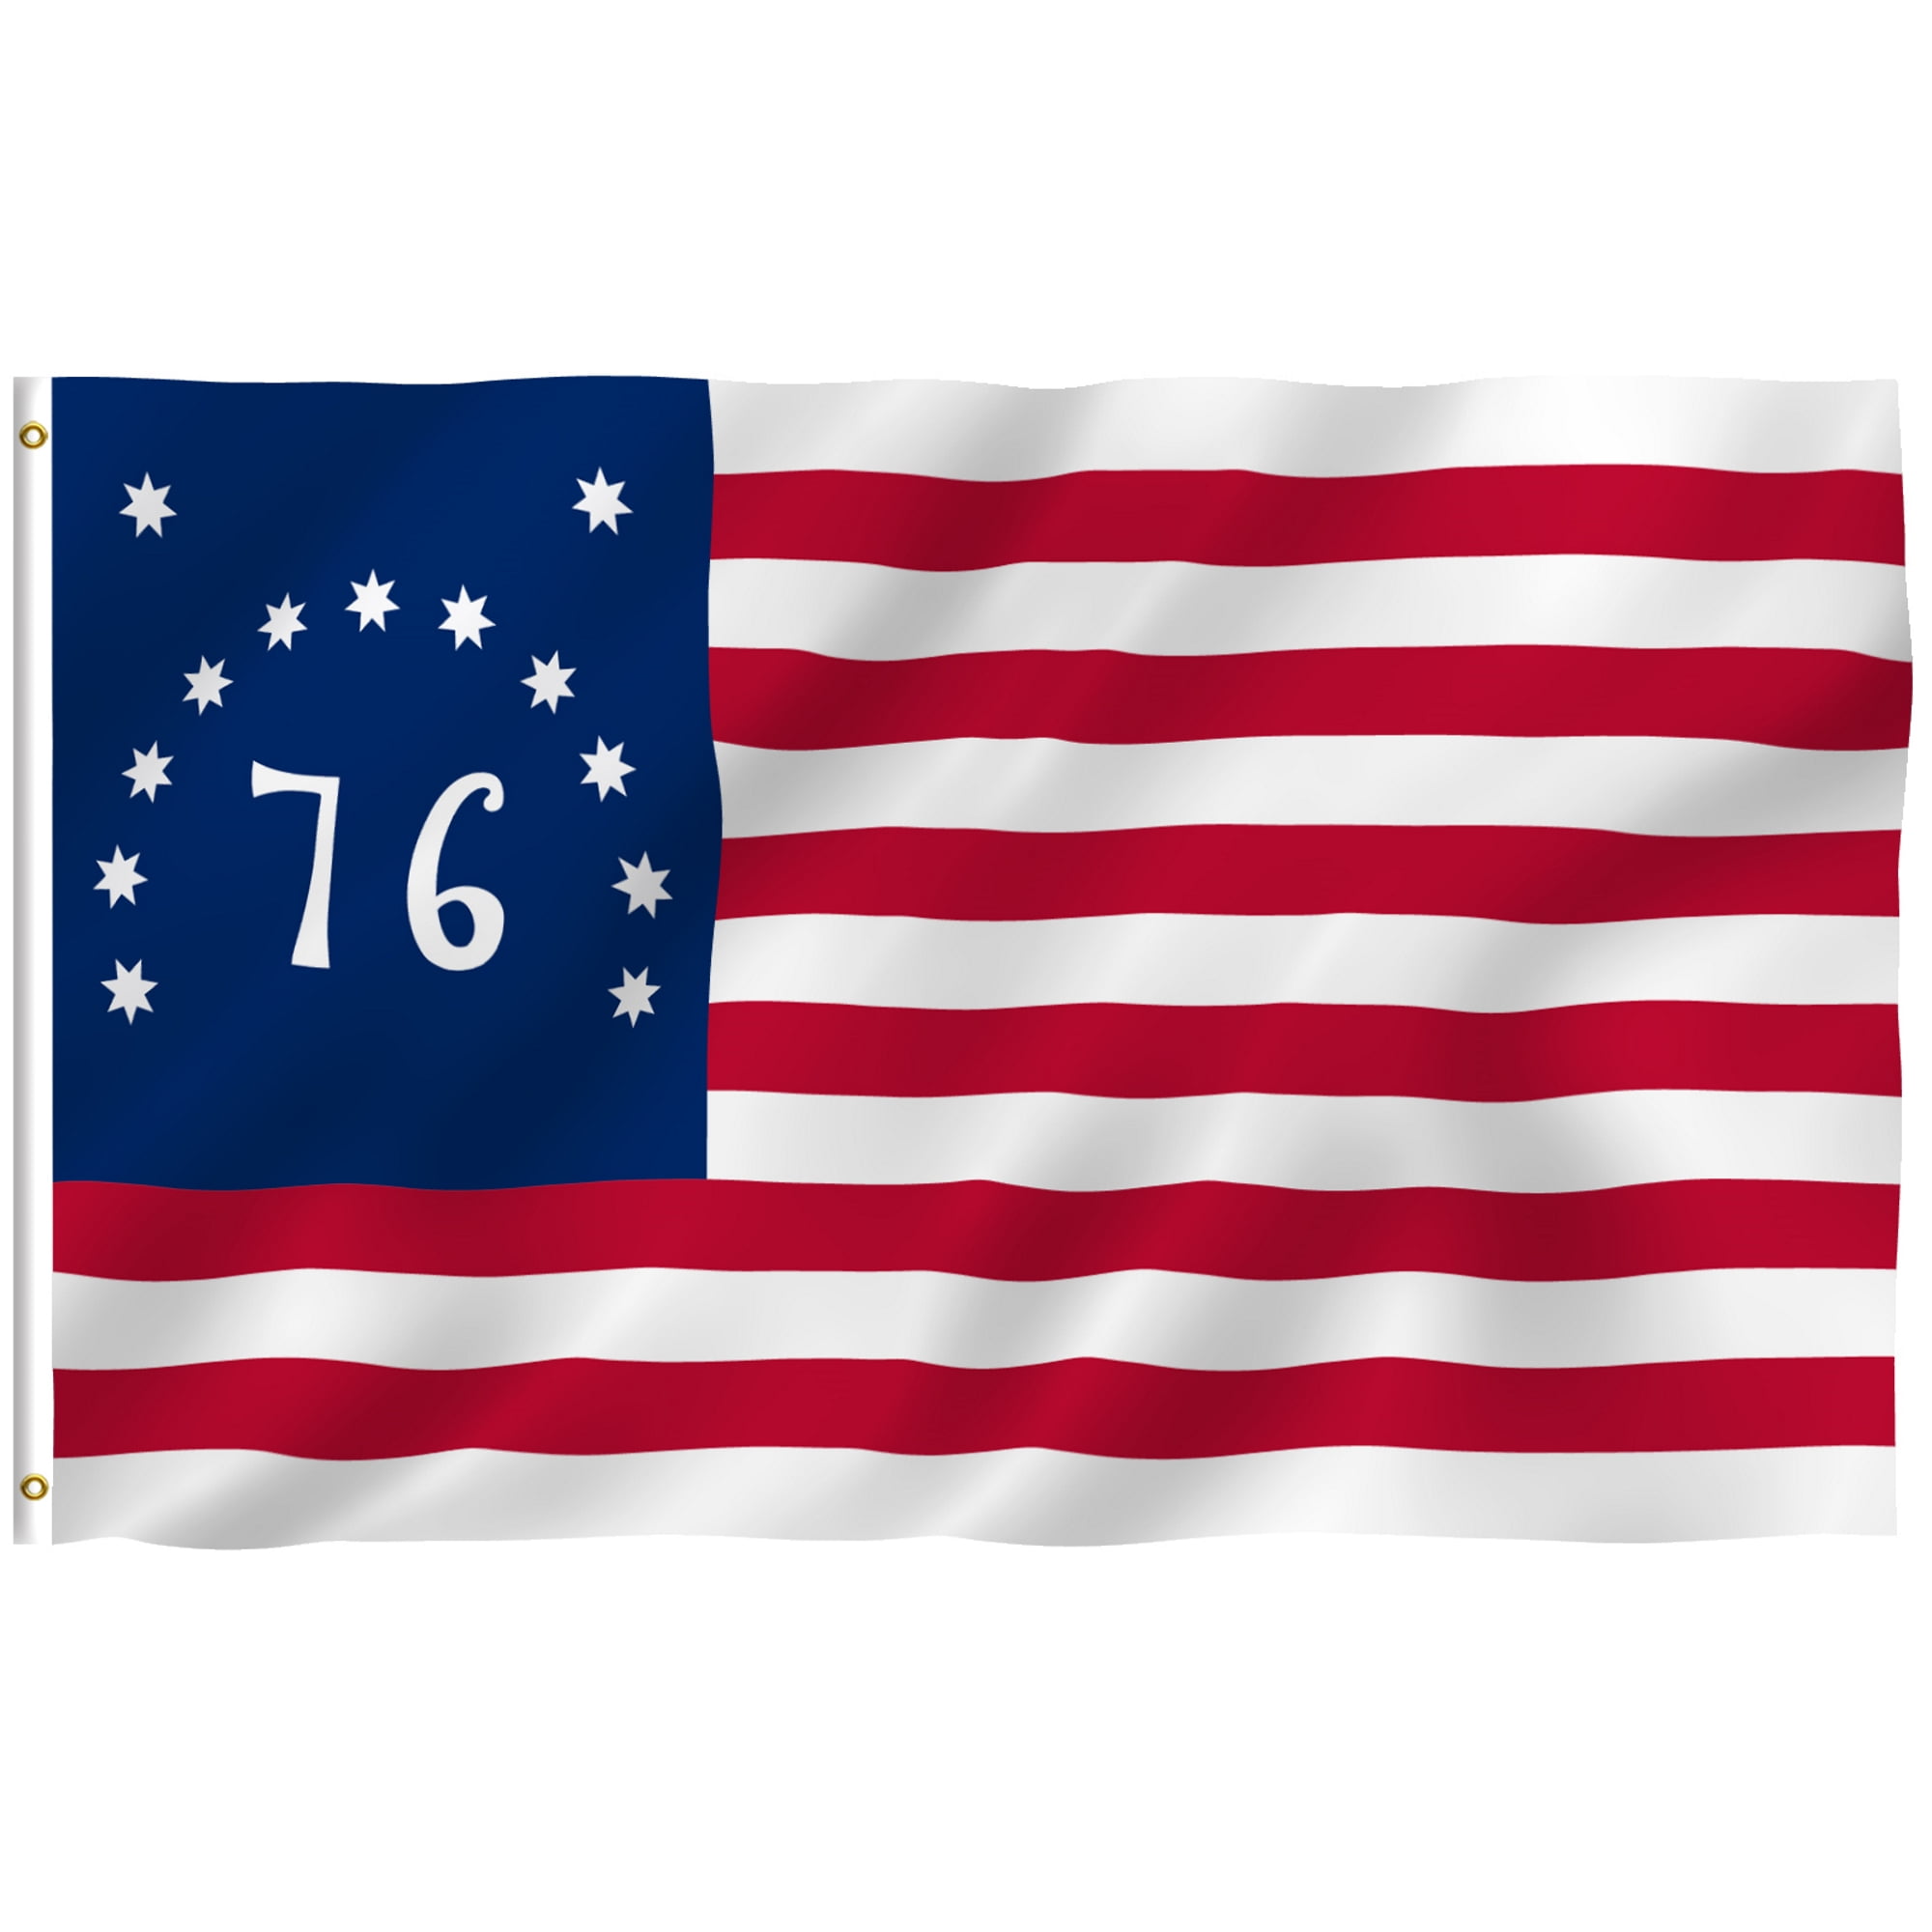 Durable All Weather Nylon Spirit of 76 Flag Beautiful Bennington Flag 3x5 ft